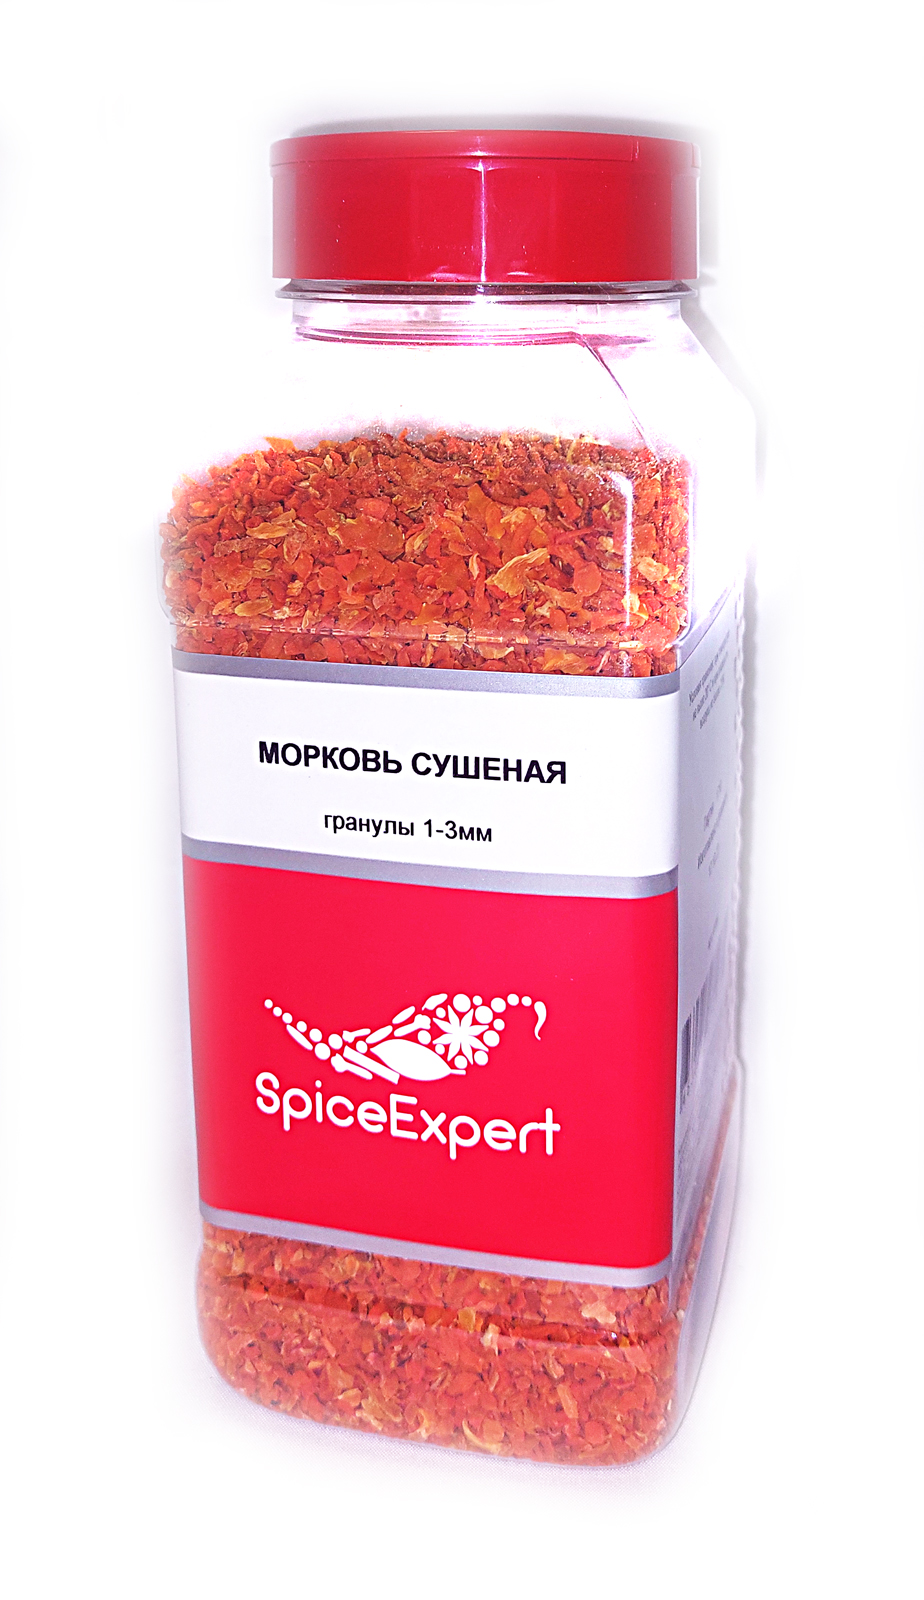 Морковь сушеная SpiceExpert 500гр